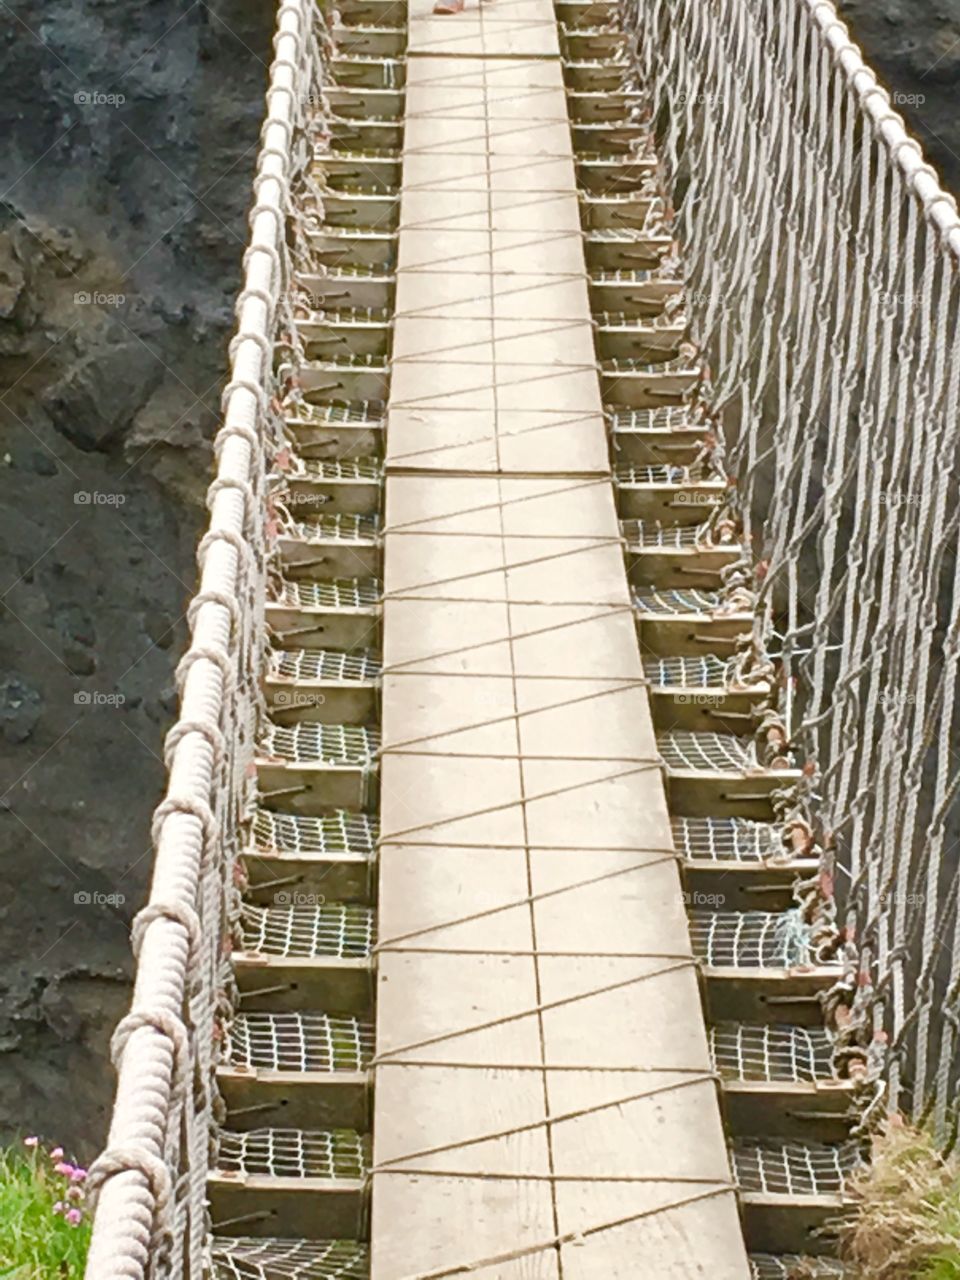 Carrack-a-Rede rope bridge, Northern Ireland 